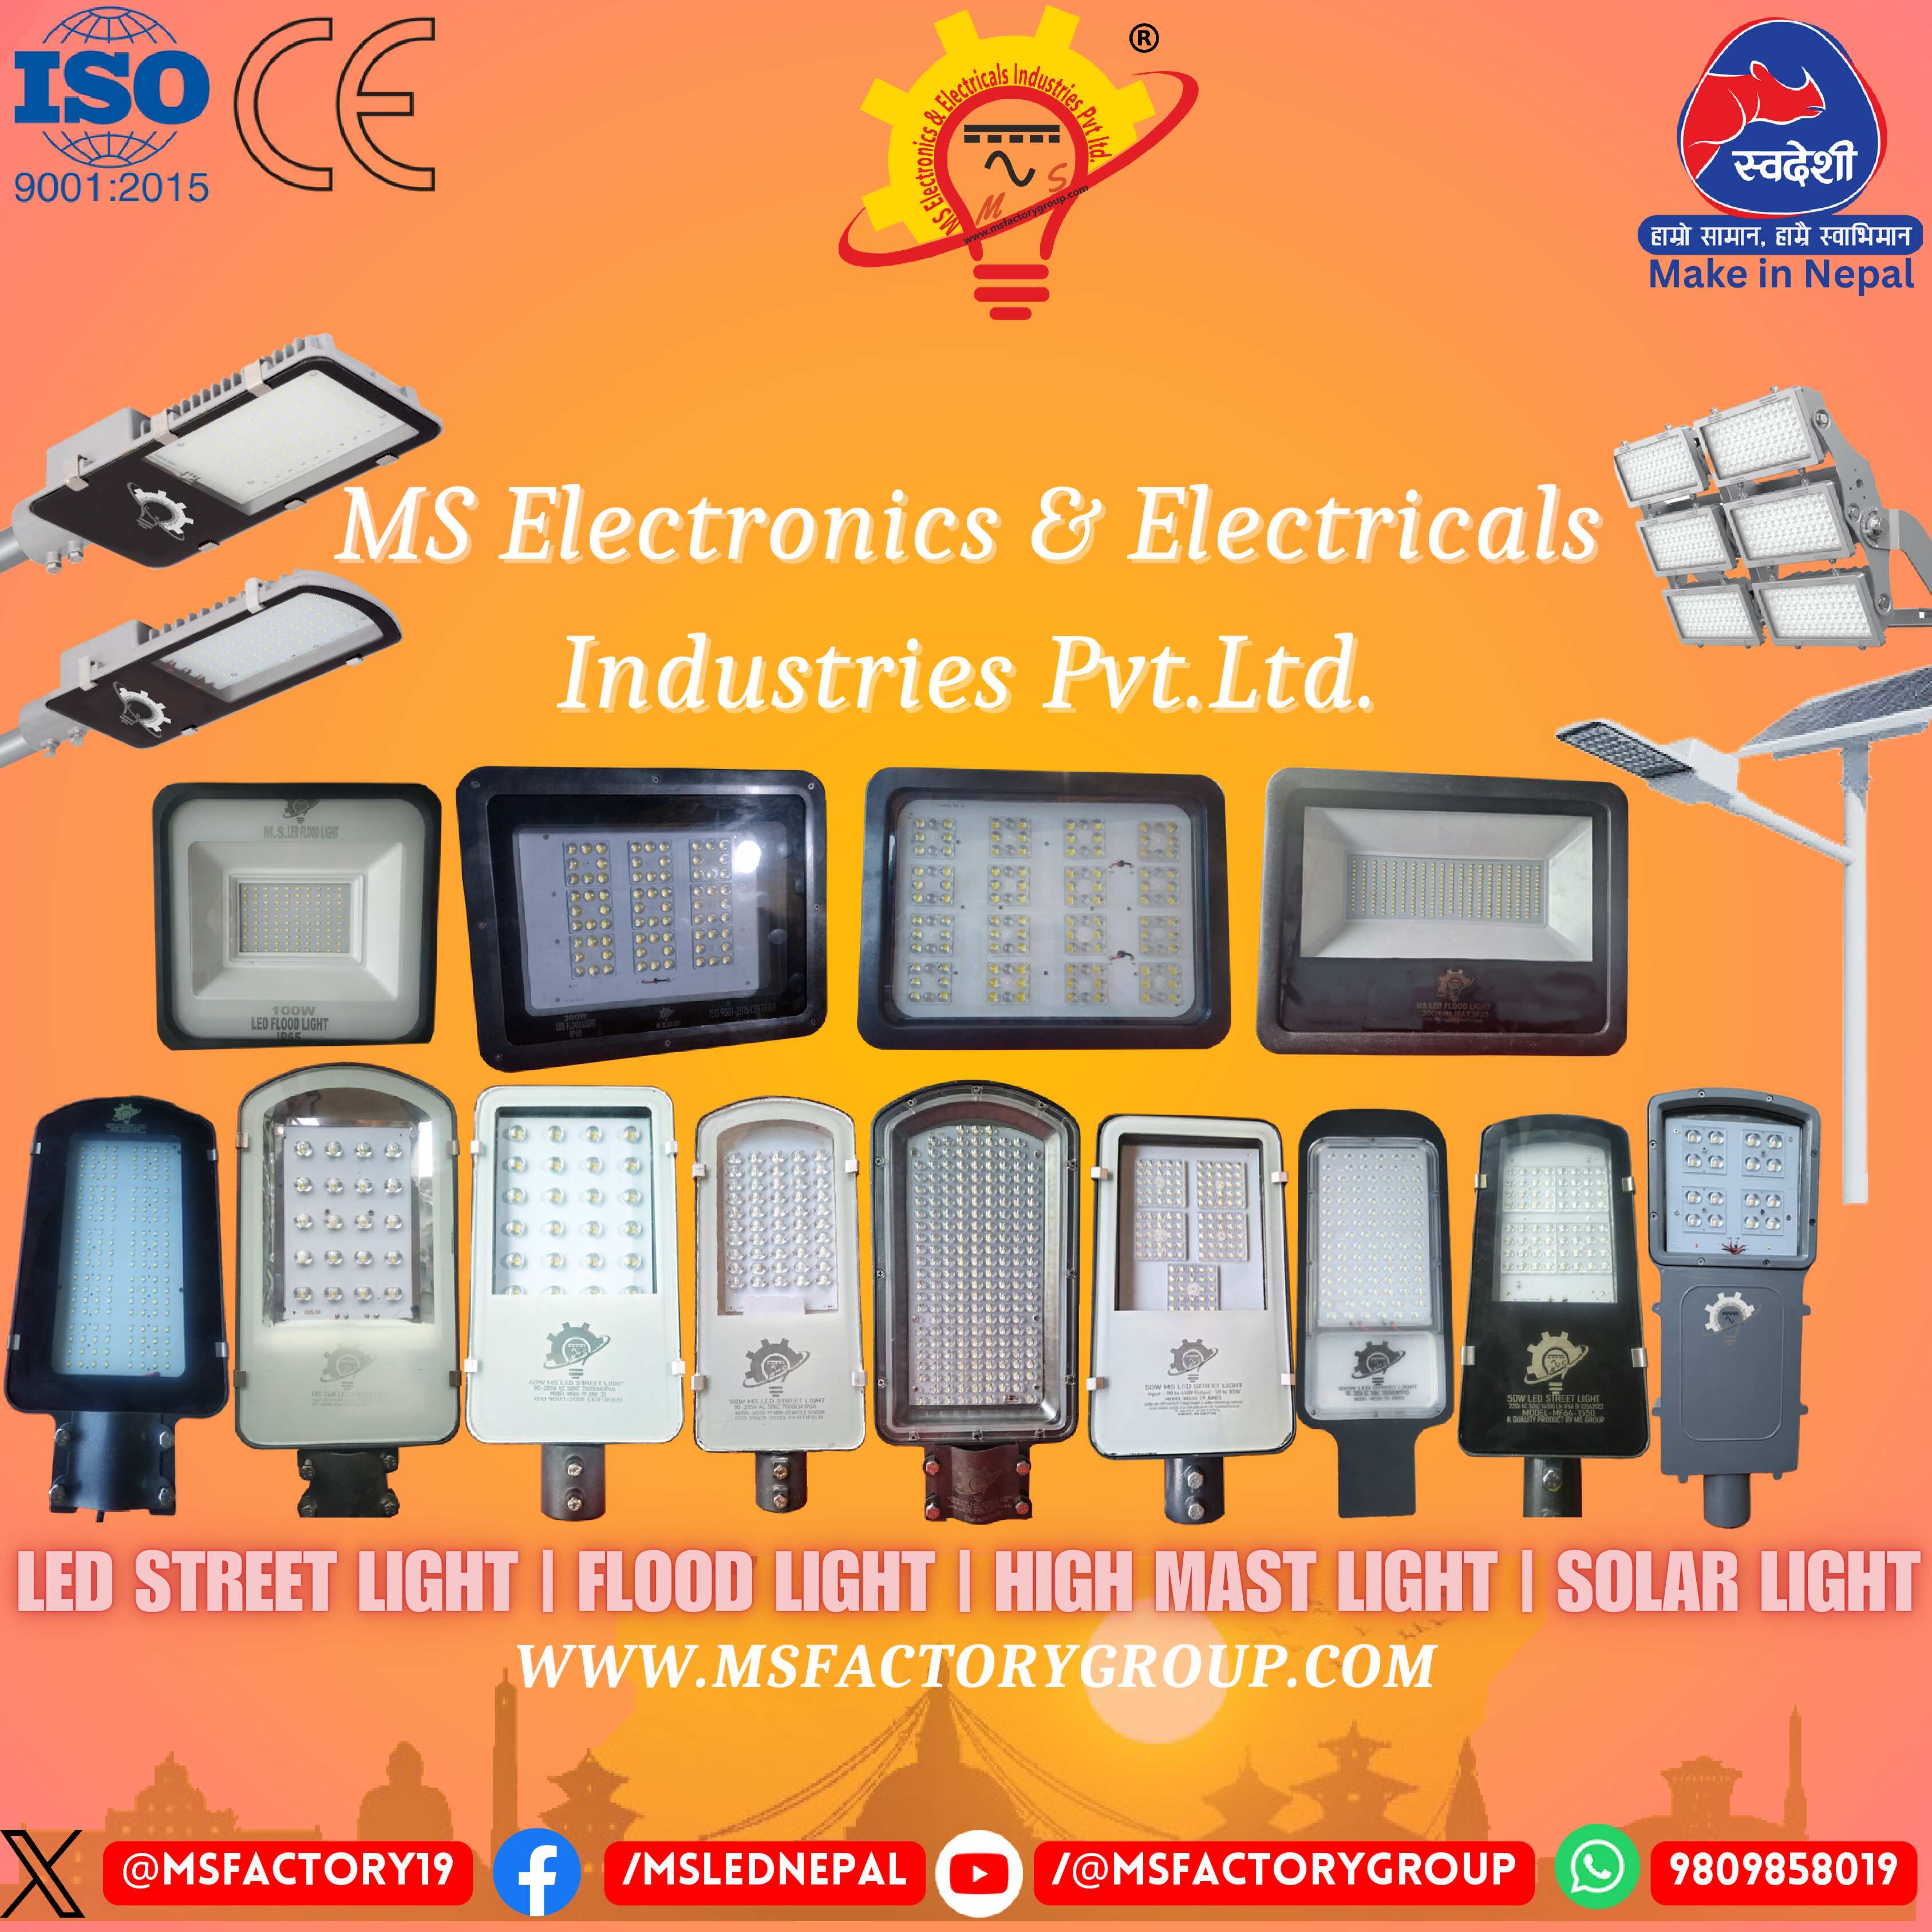 MS Electronics & Electricals Industries Pvt. Ltd